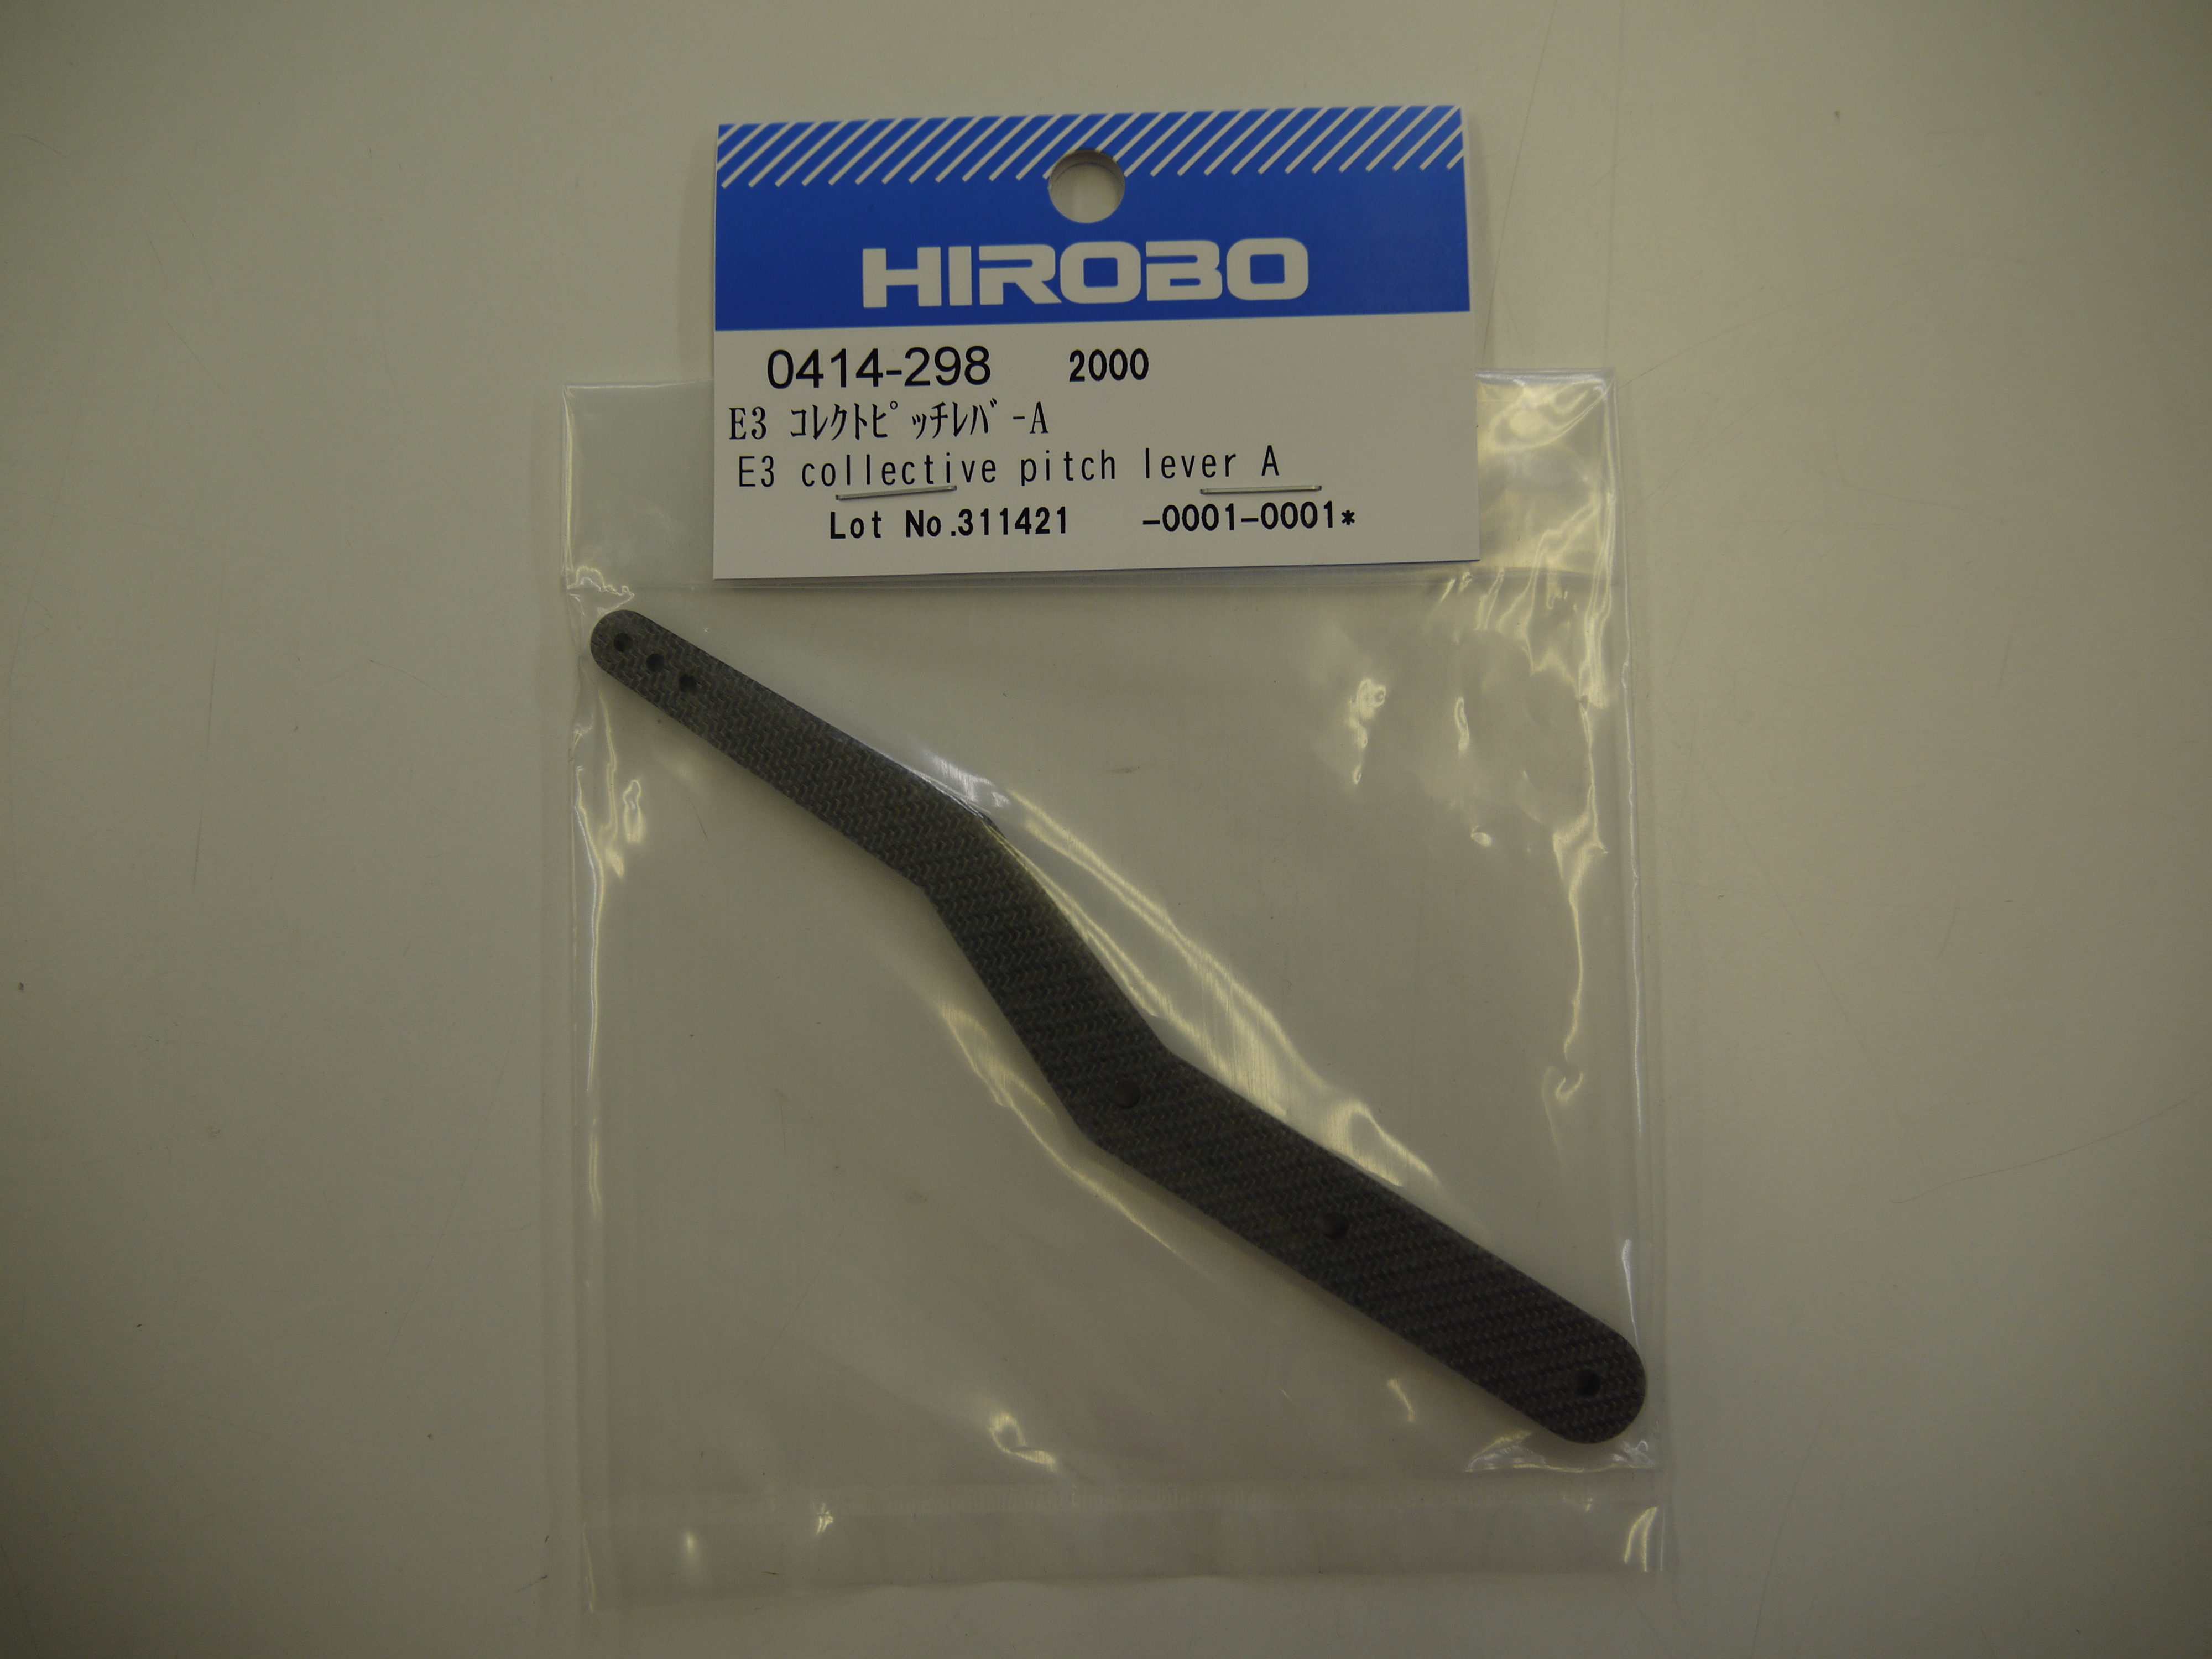 Hirobo 2x85mm Strengthened Turnbuckle Rod 2522-048 